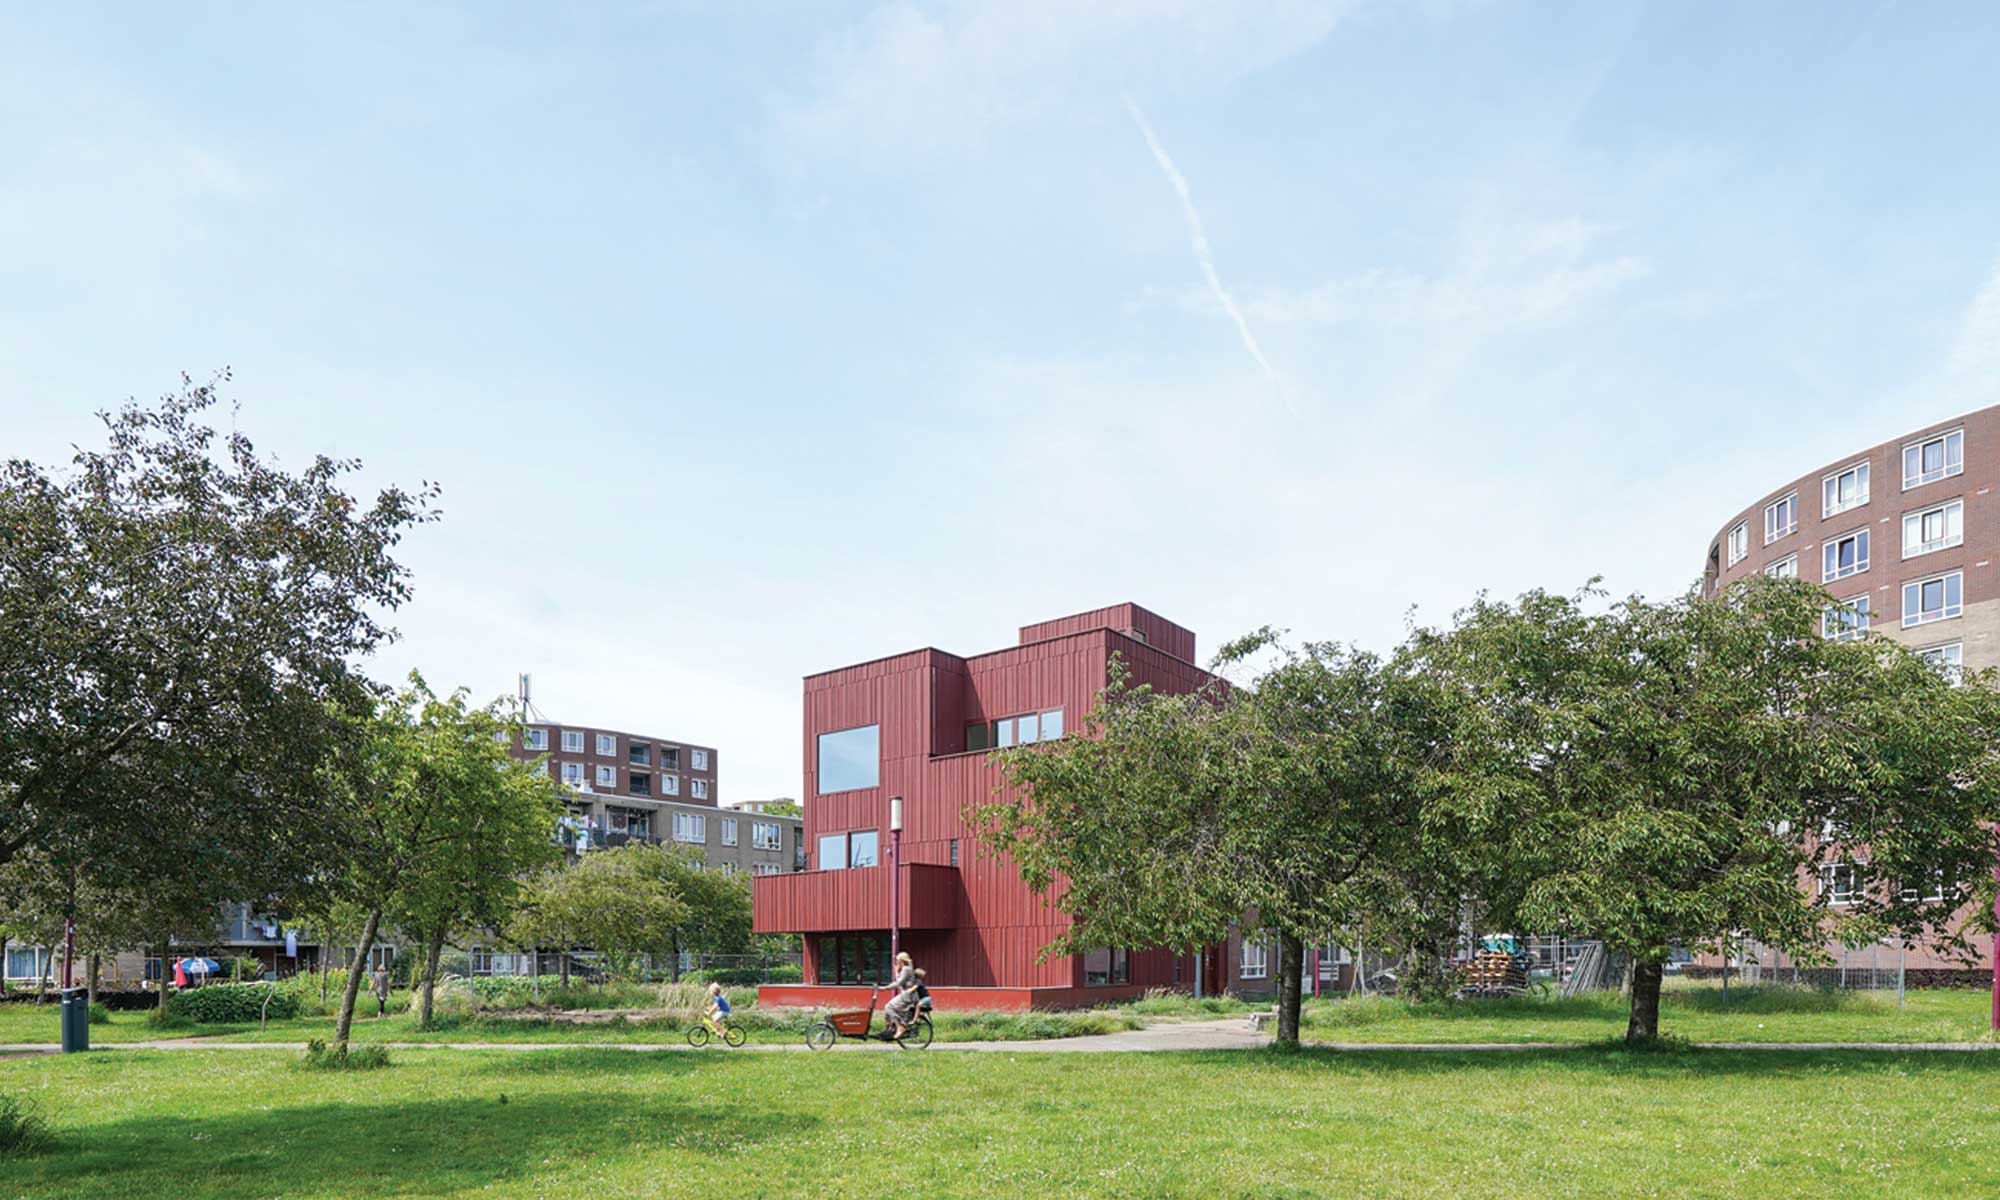 Gebouw CLT in Rotterdam. 
Drie gestapelde woningen volledig in hout